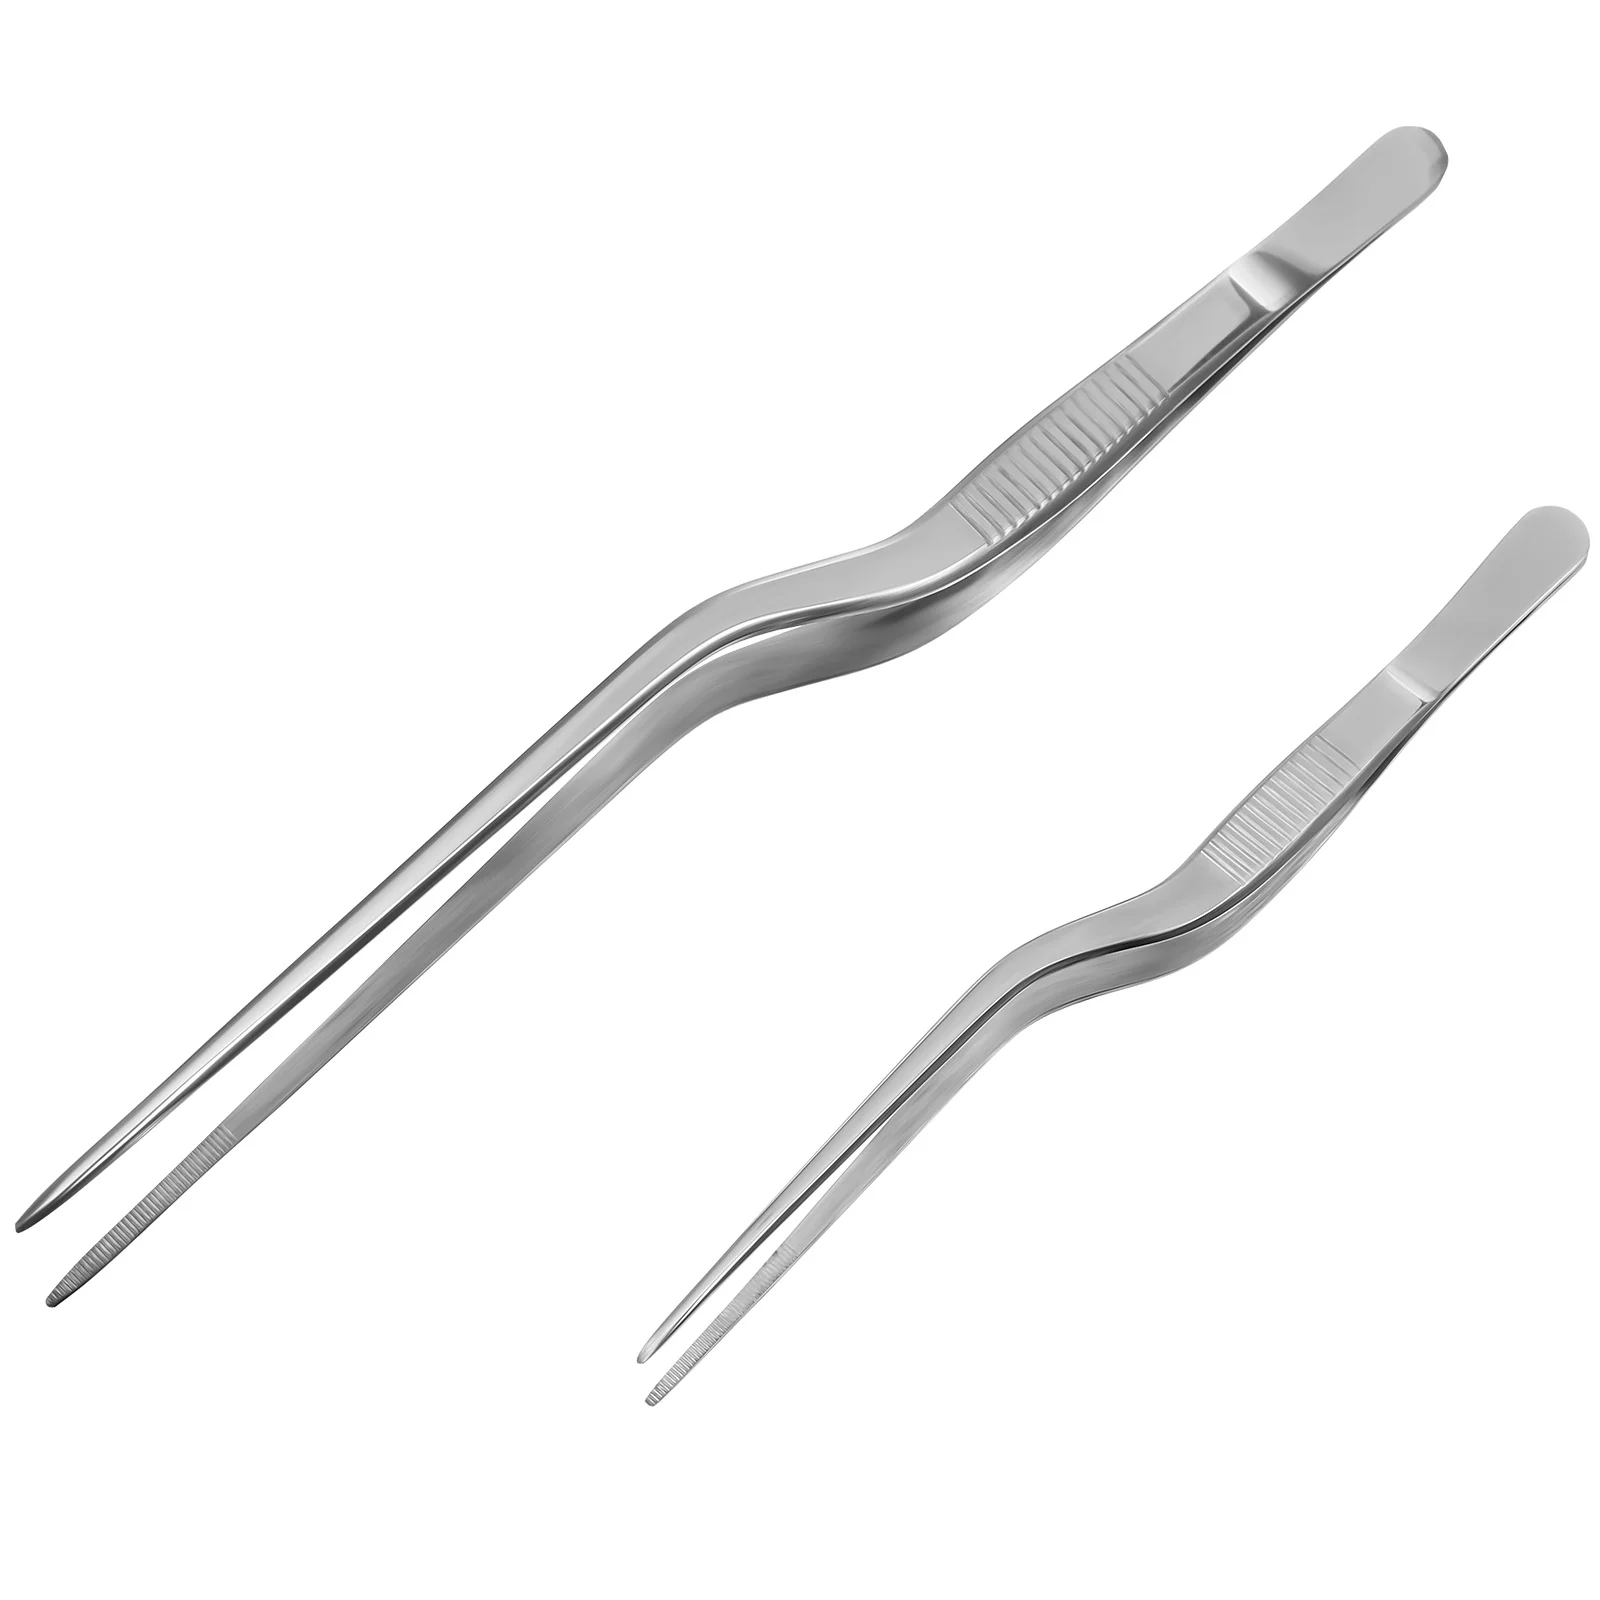 

2 Pcs Stainless Steel Tweezers Cooking Food Clip Tongs Kitchen Kitchenware Fishbone Nail Tools Utensils